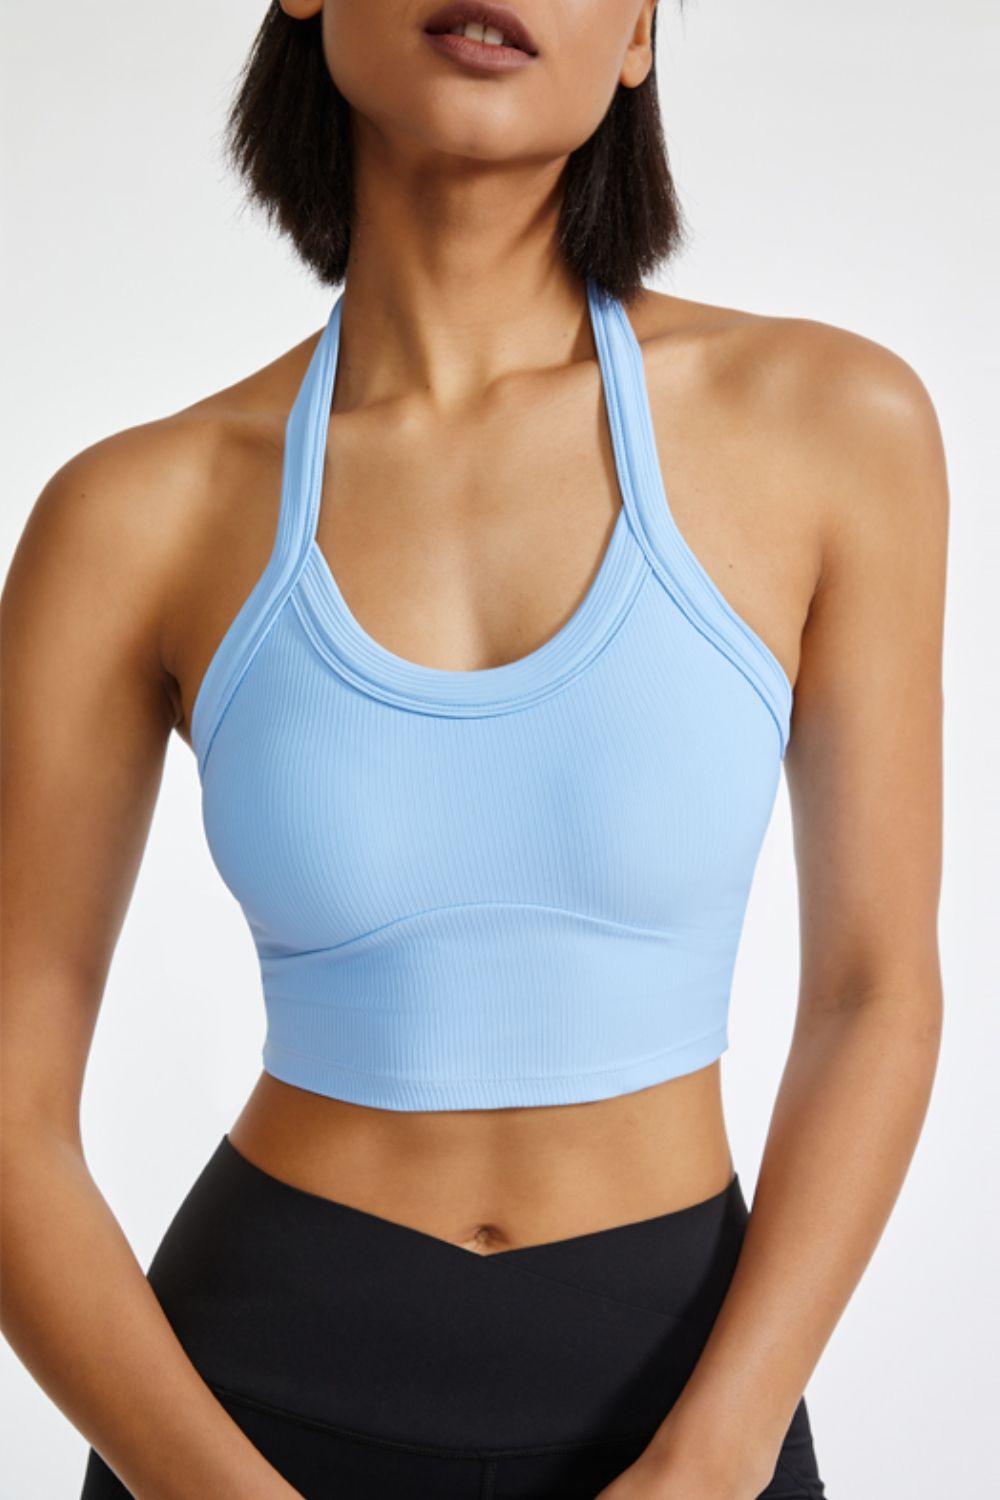 a woman wearing a blue sports bra top